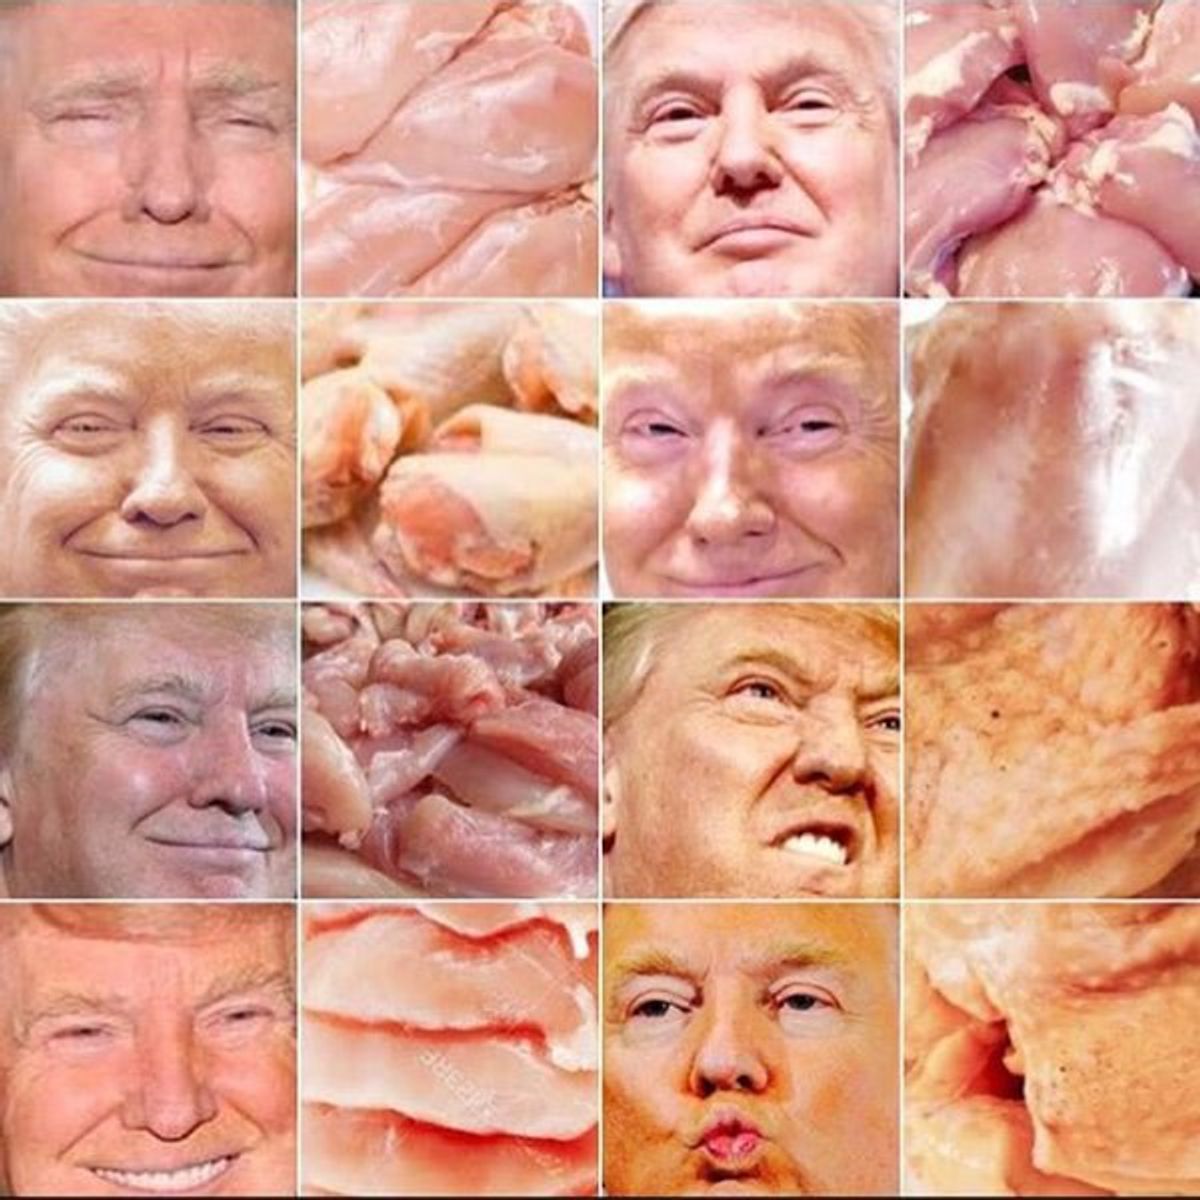 Donald Trump or Raw Chicken?